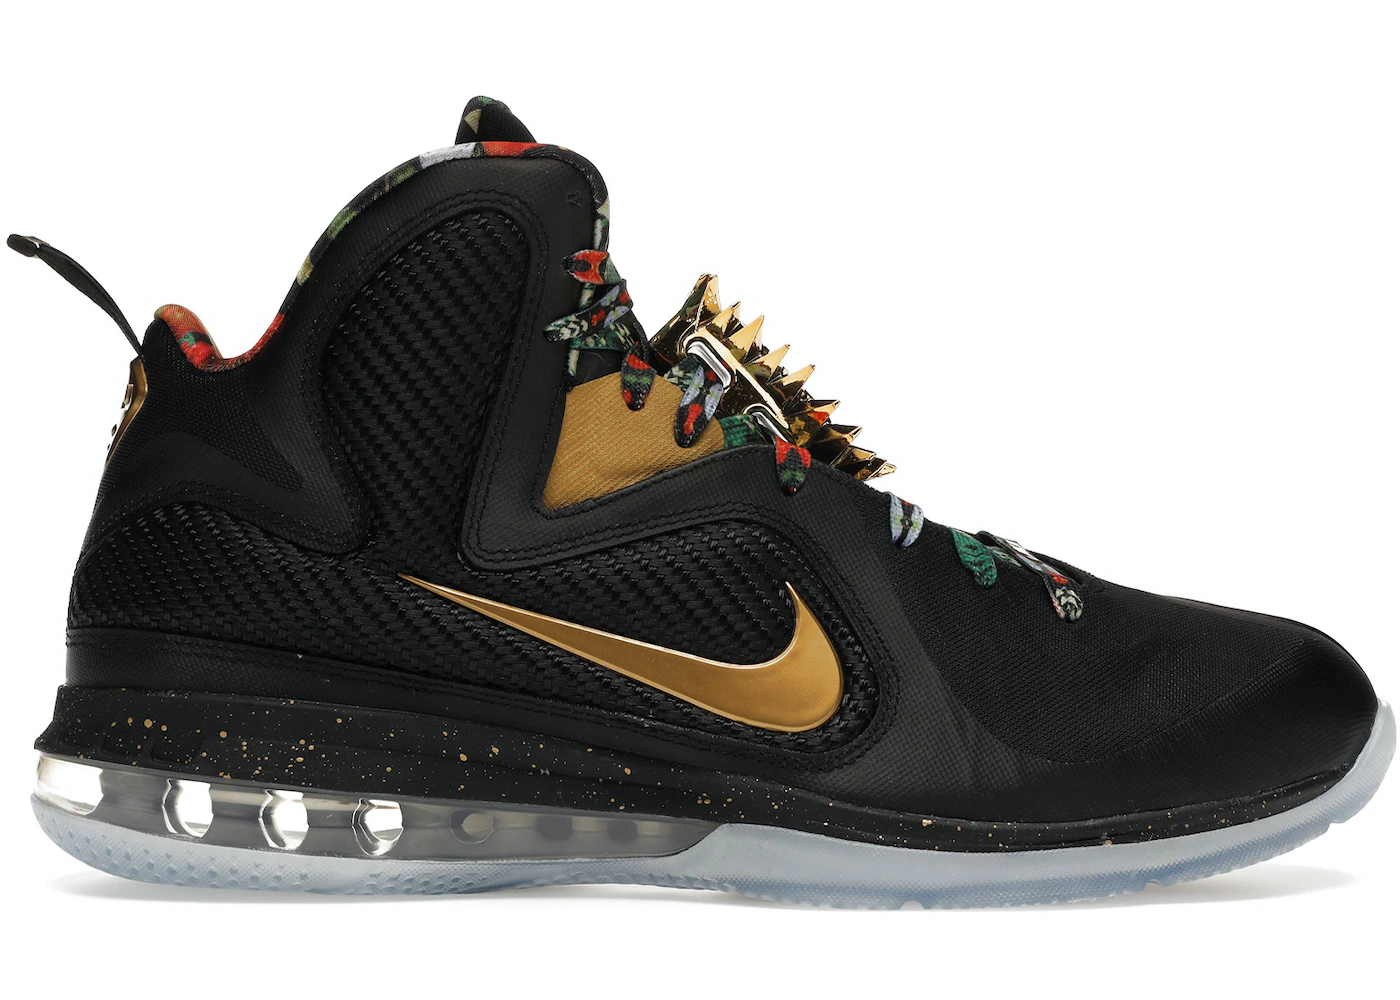 Nike LeBron 9 Watch The Throne 9 / Black